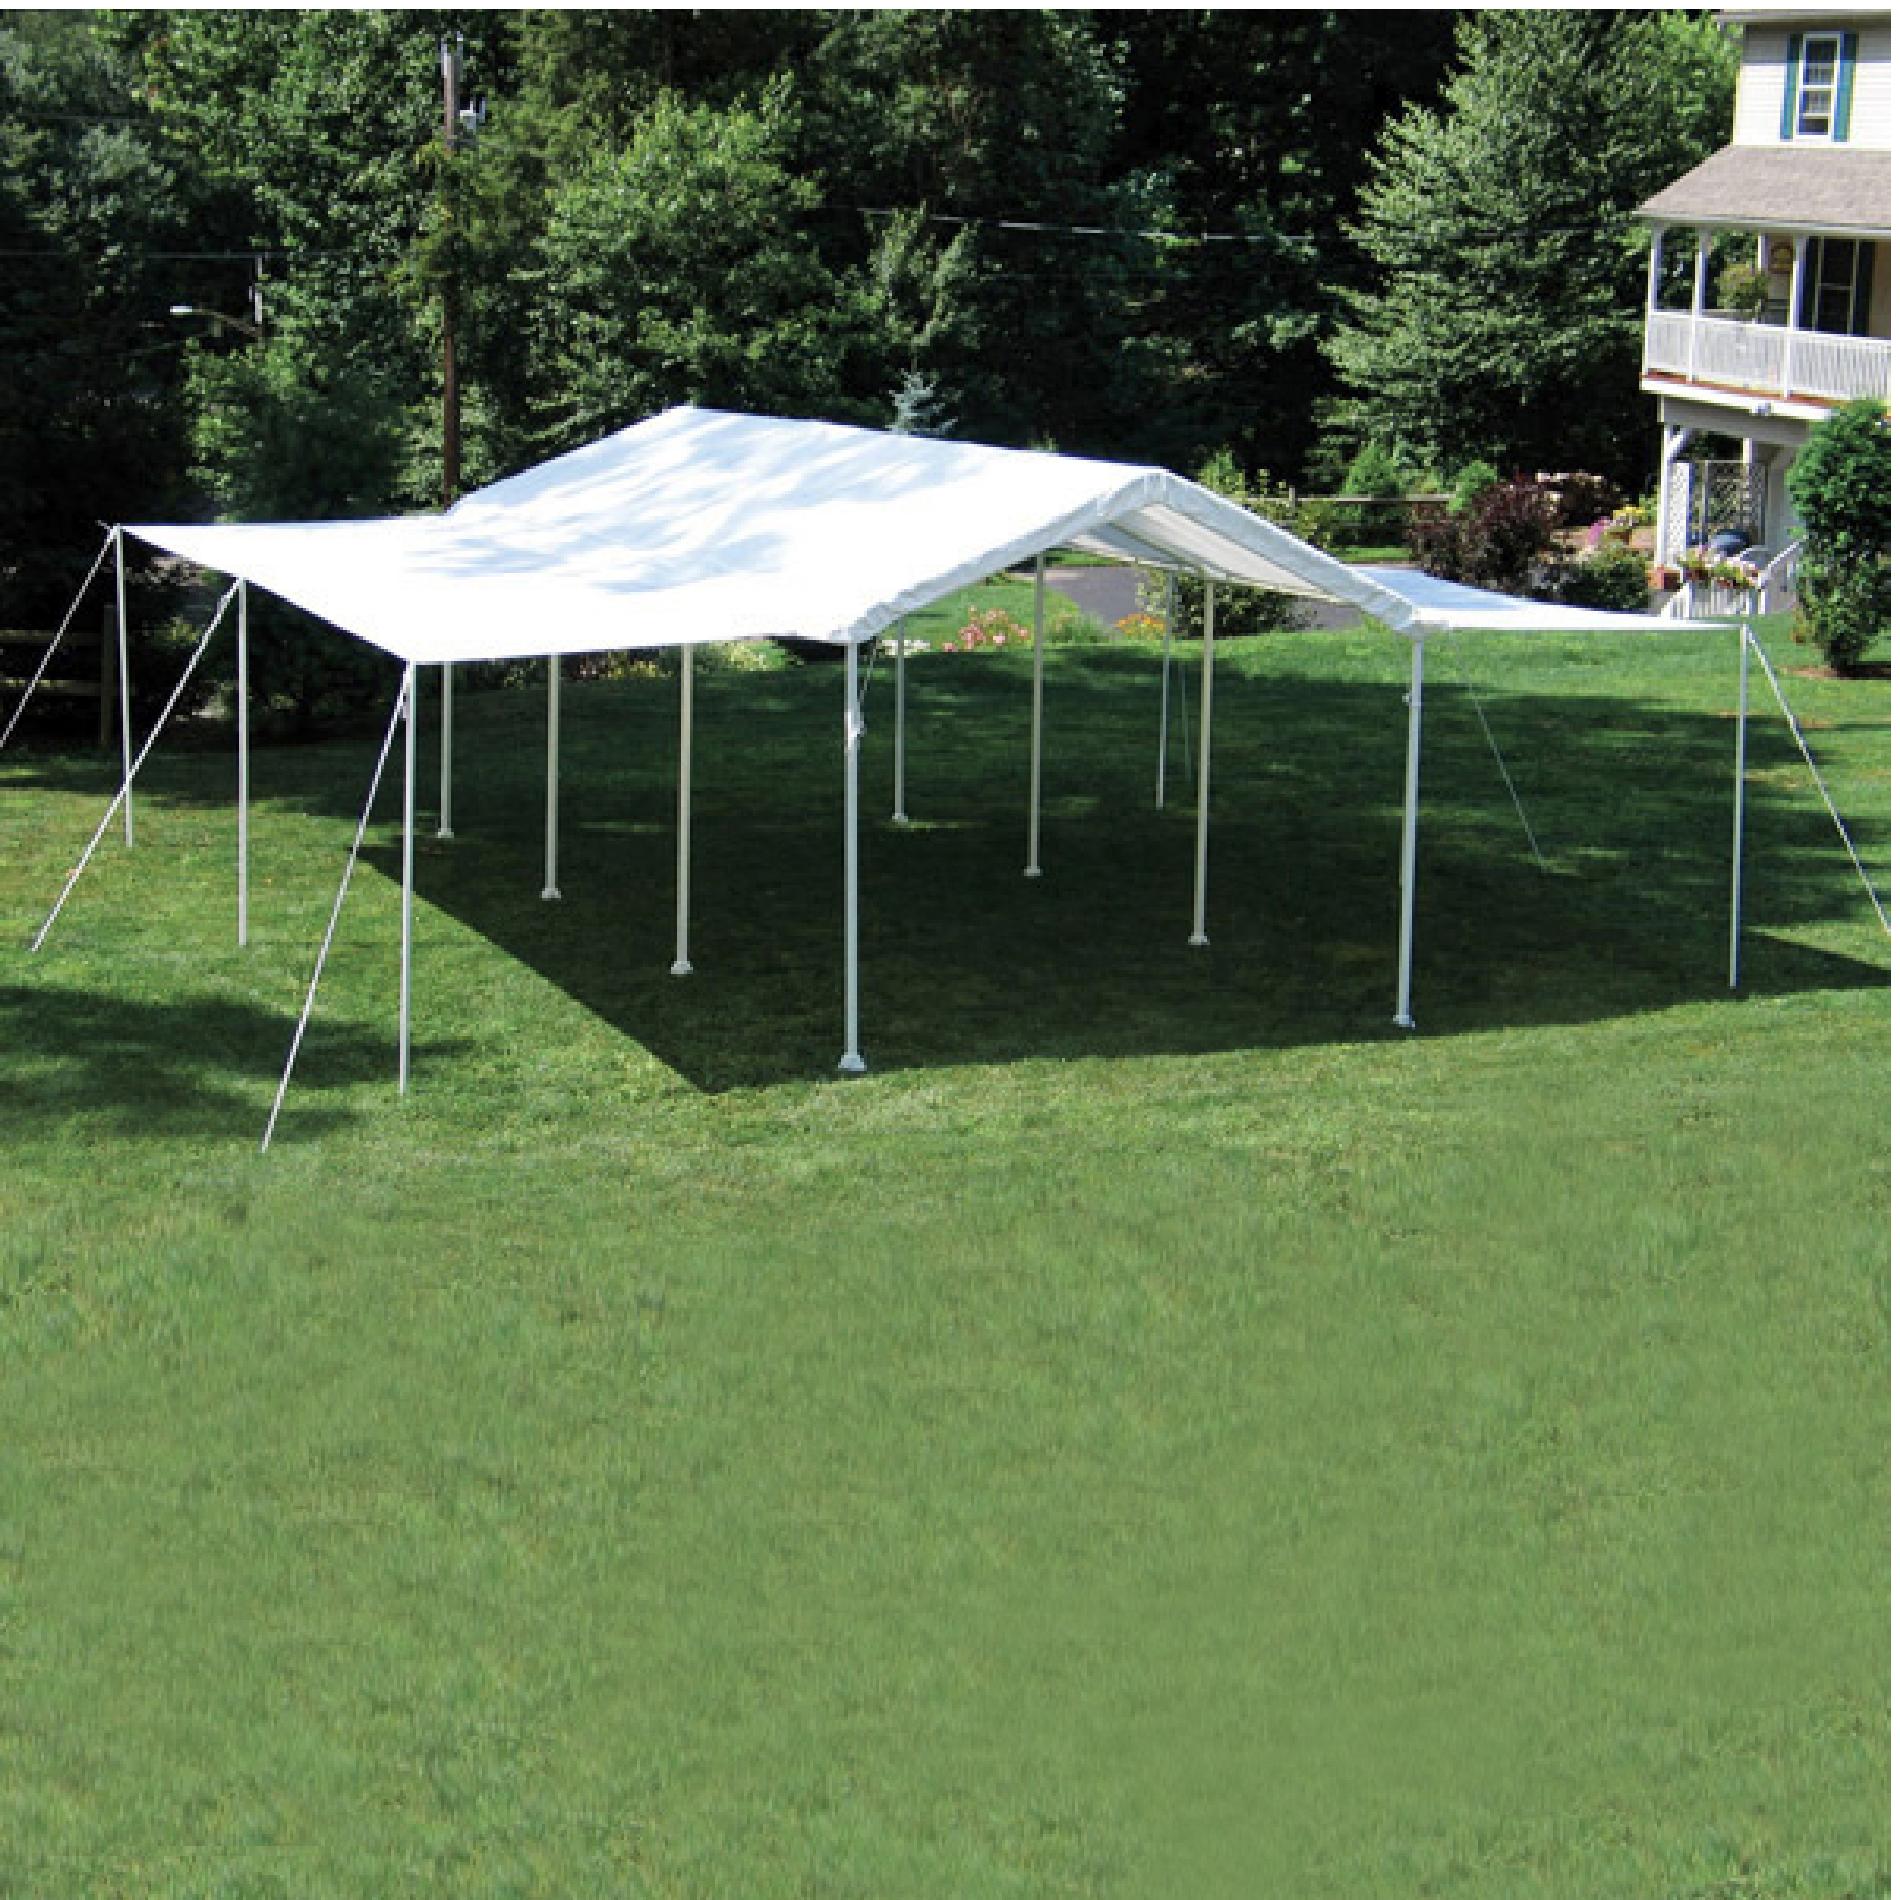 ShelterLogic 10' x 20' Canopy Extension Kit - White